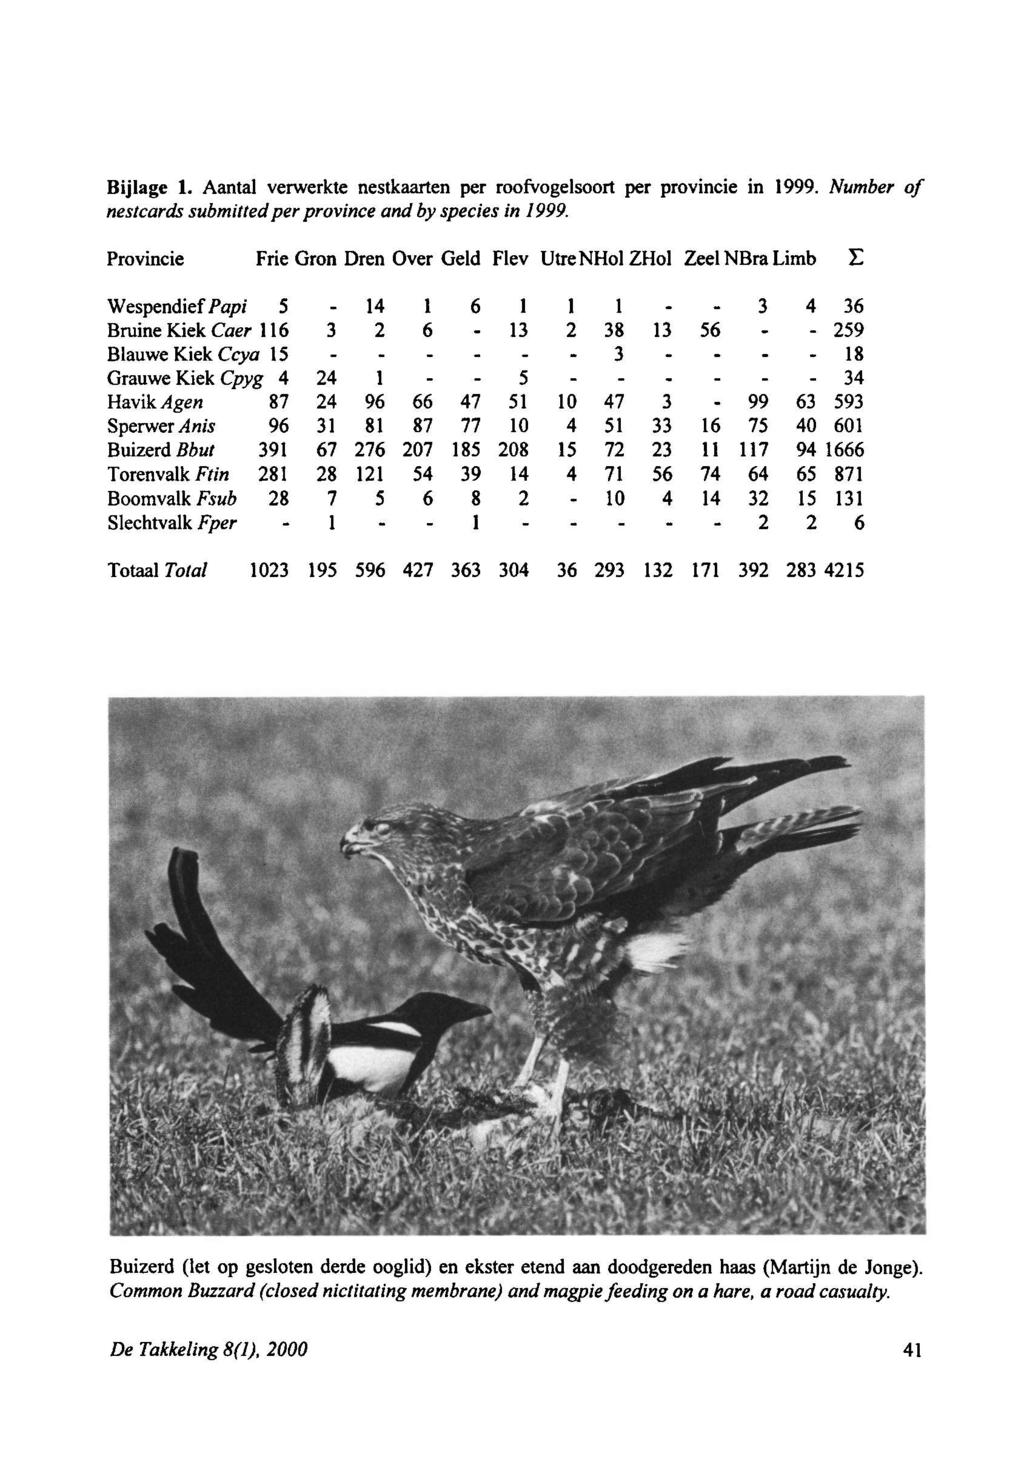 4 3 3 5 0. 3 99 Bijlage. Aantal verwerkte nestkaarten per roofvogelsoort per provincie in 999. Number of nestcards submitted per province and by species in 999.